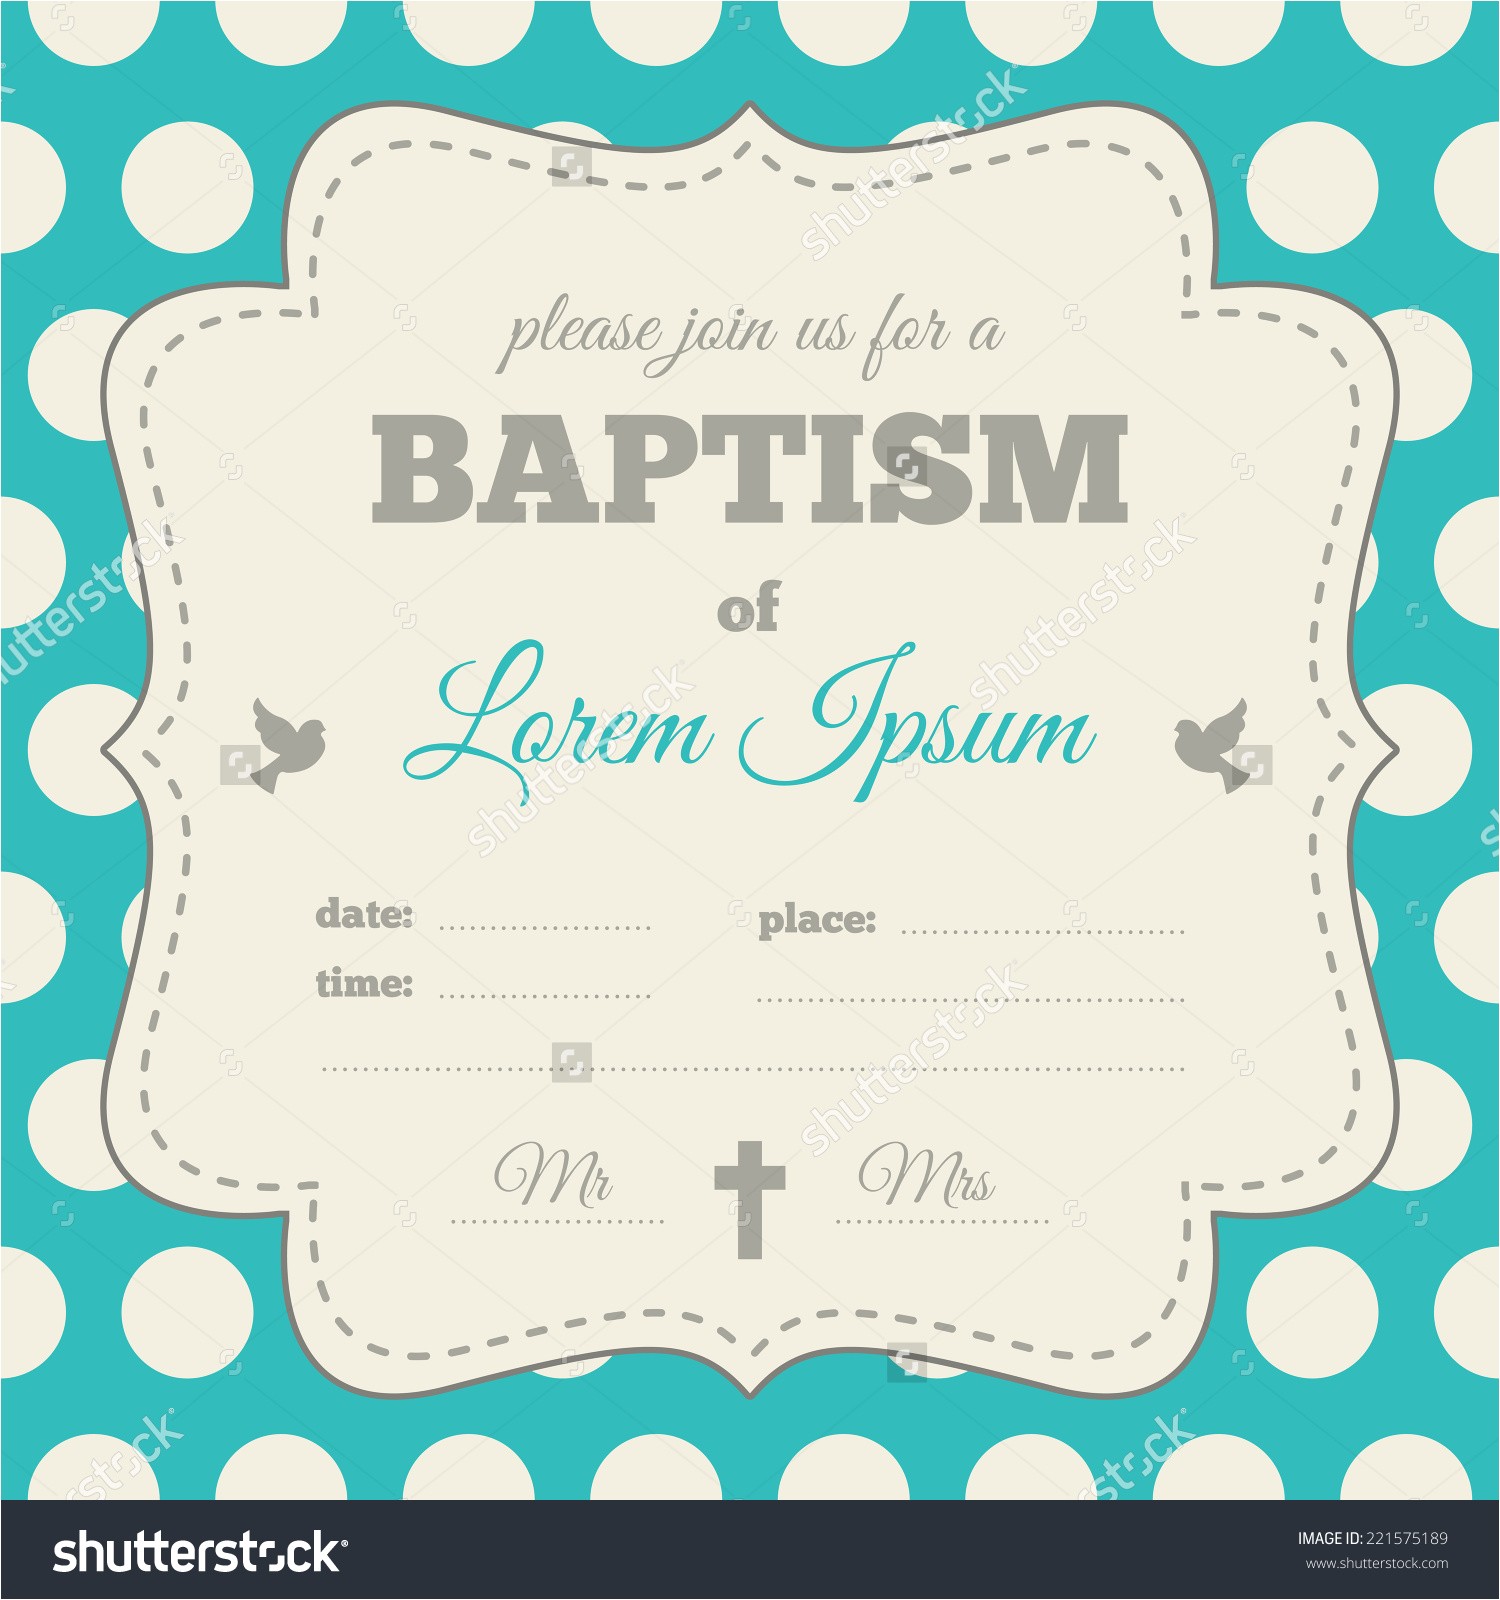 baptism invitation template free